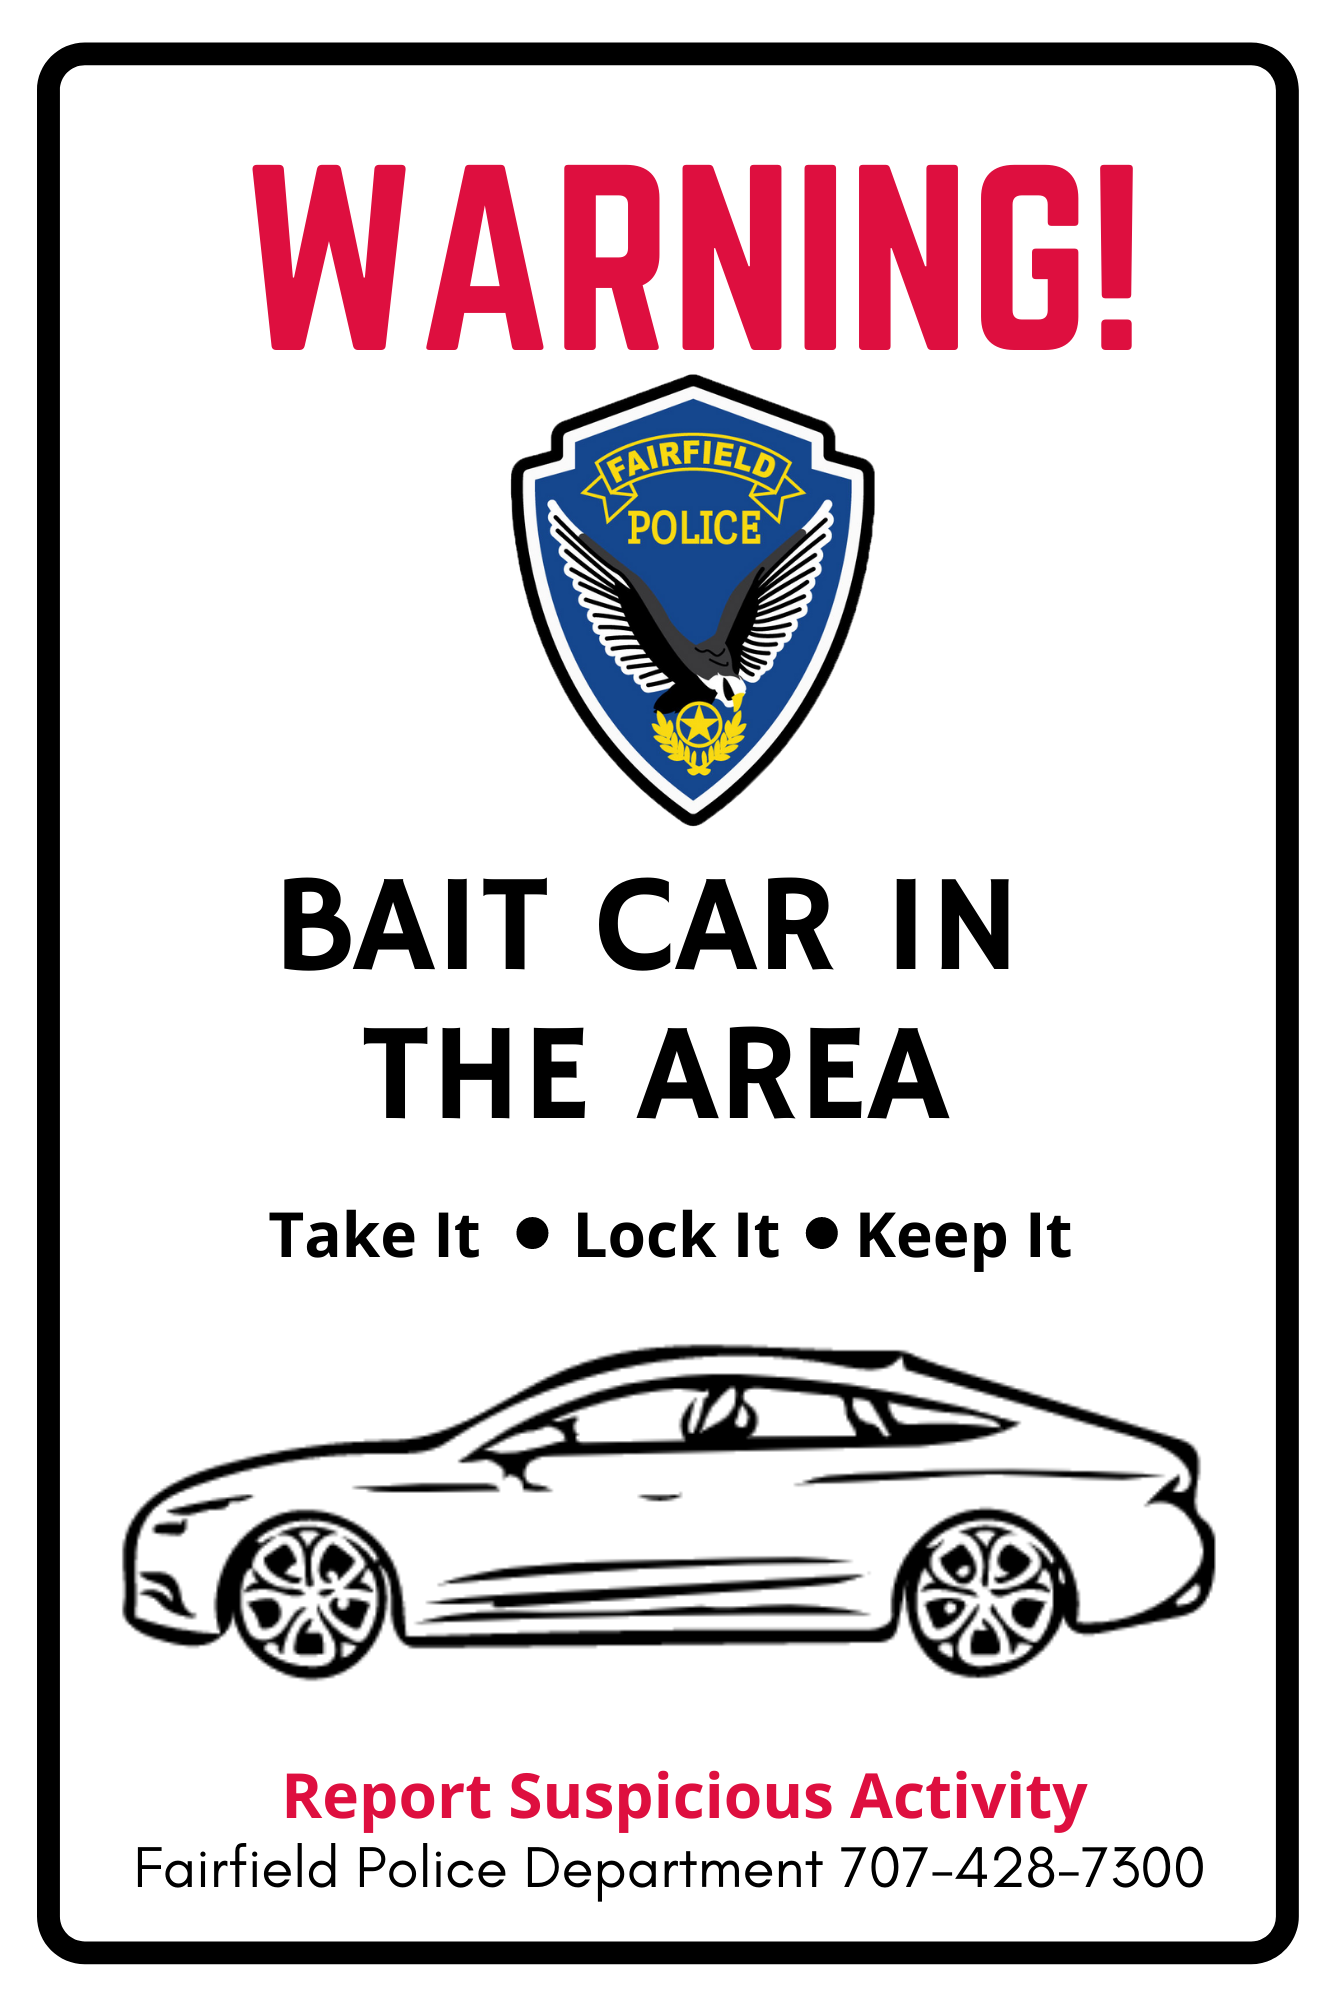 Vehicle Burglary Prevention